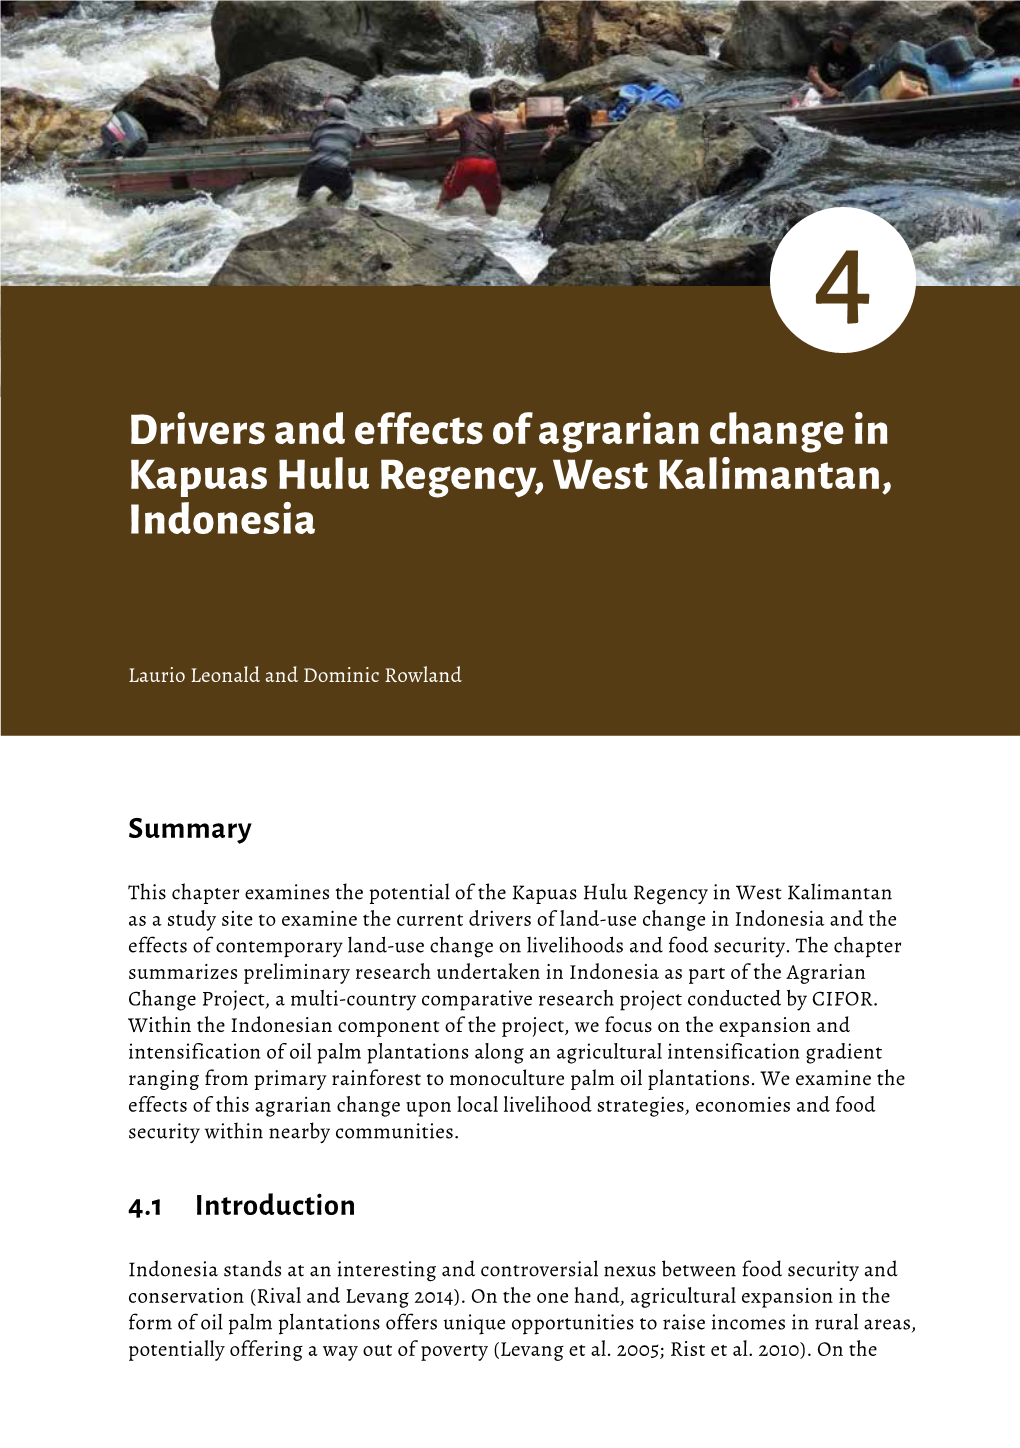 Drivers and Effects of Agrarian Change in Kapuas Hulu Regency, West Kalimantan, Indonesia